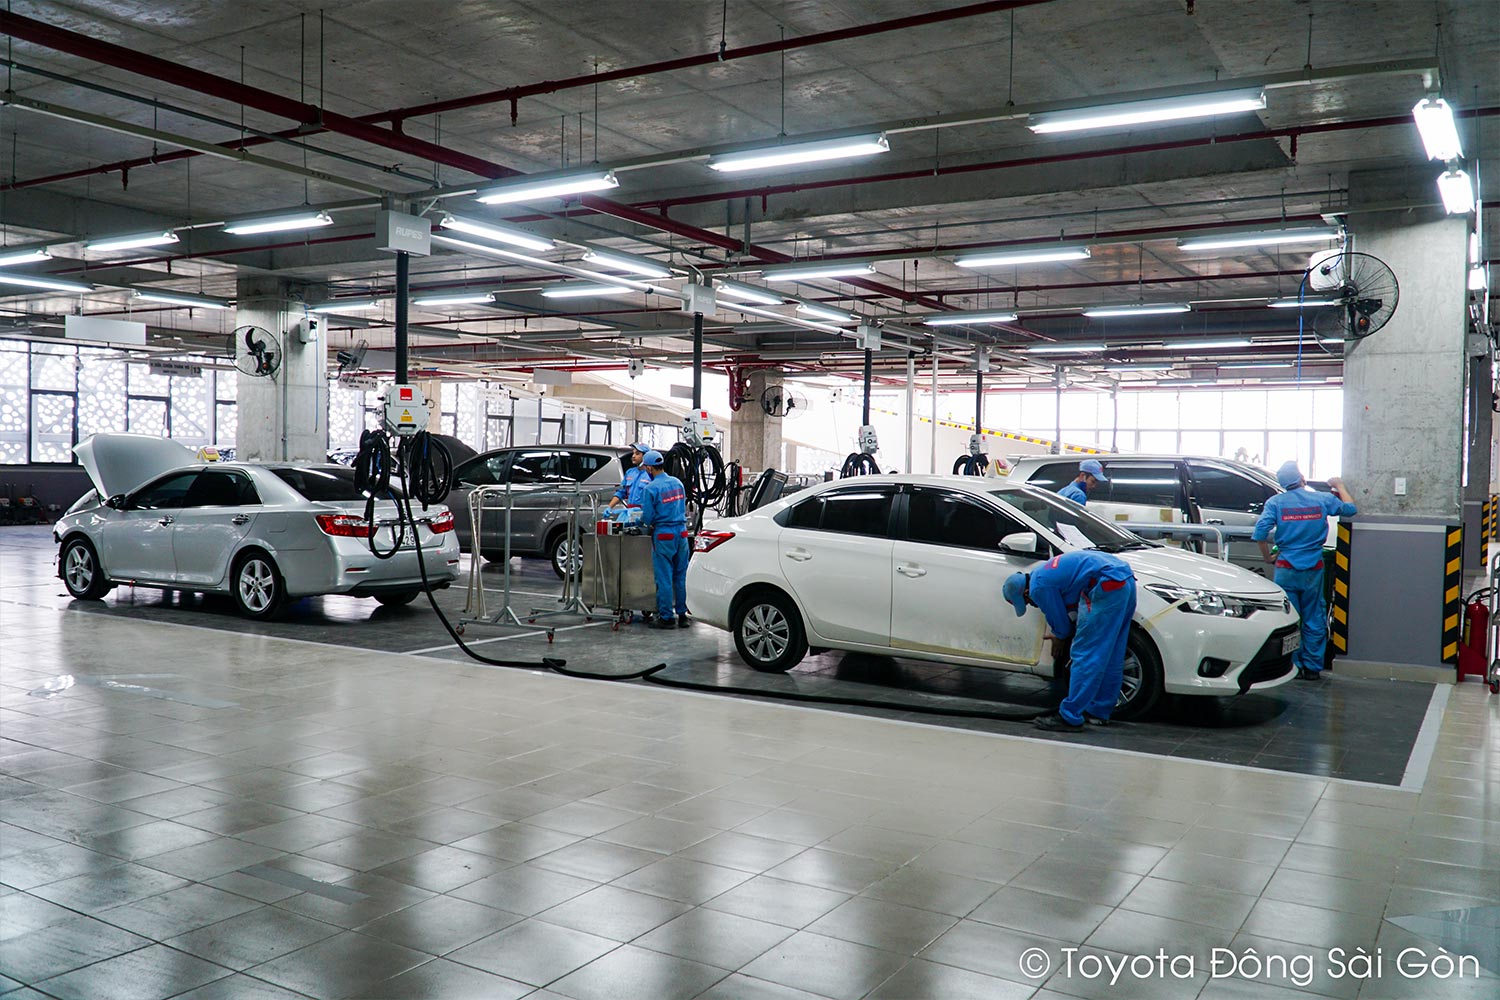 Program "Toyota Phap Van service promotion"